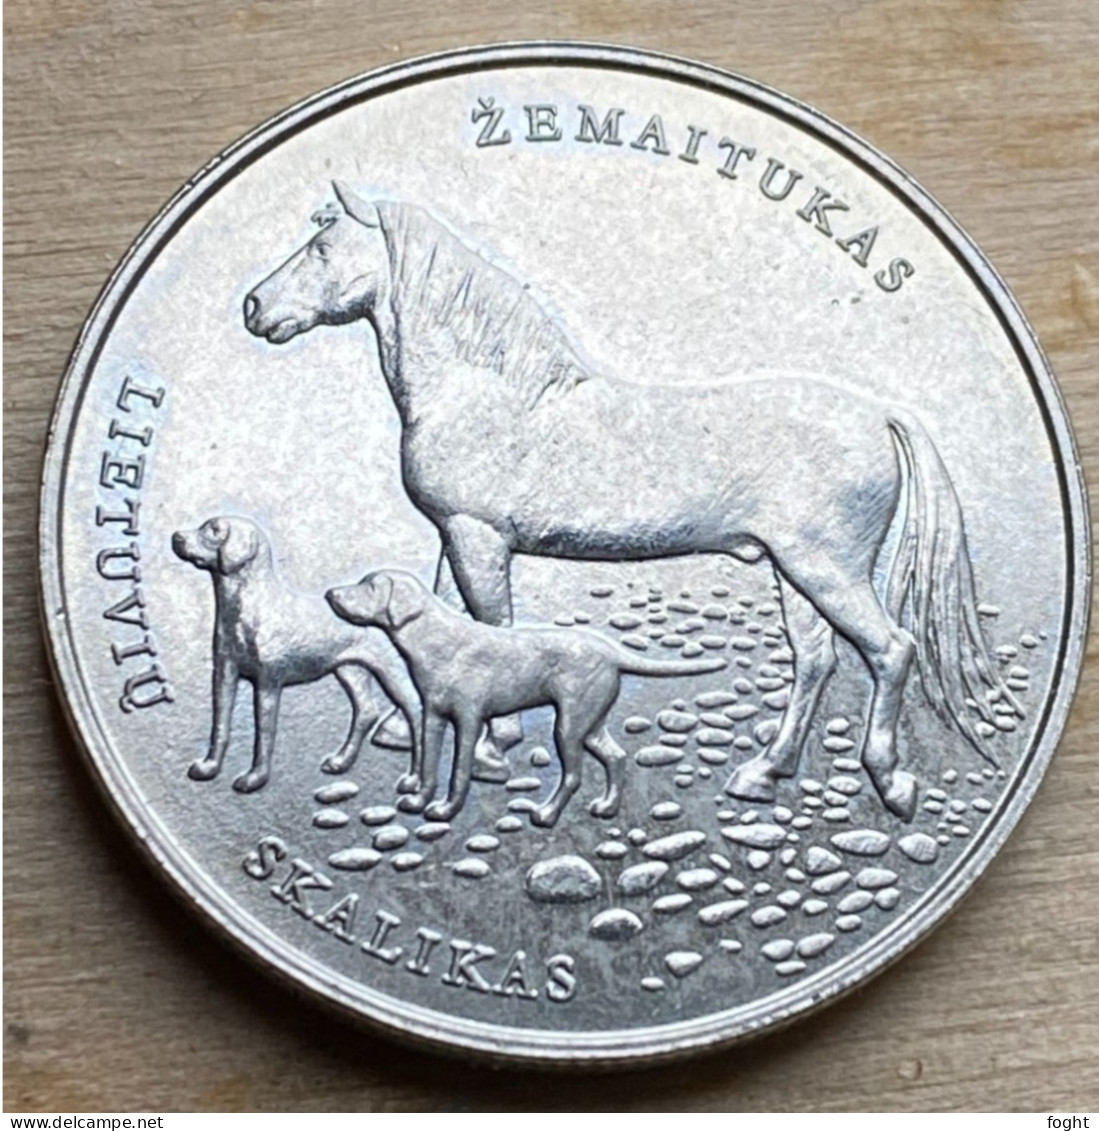 2017 LMK Lithuania "Lithuanian Hounds And Horse" 1.5 Euro Coin,KM#225,7121 - Litouwen